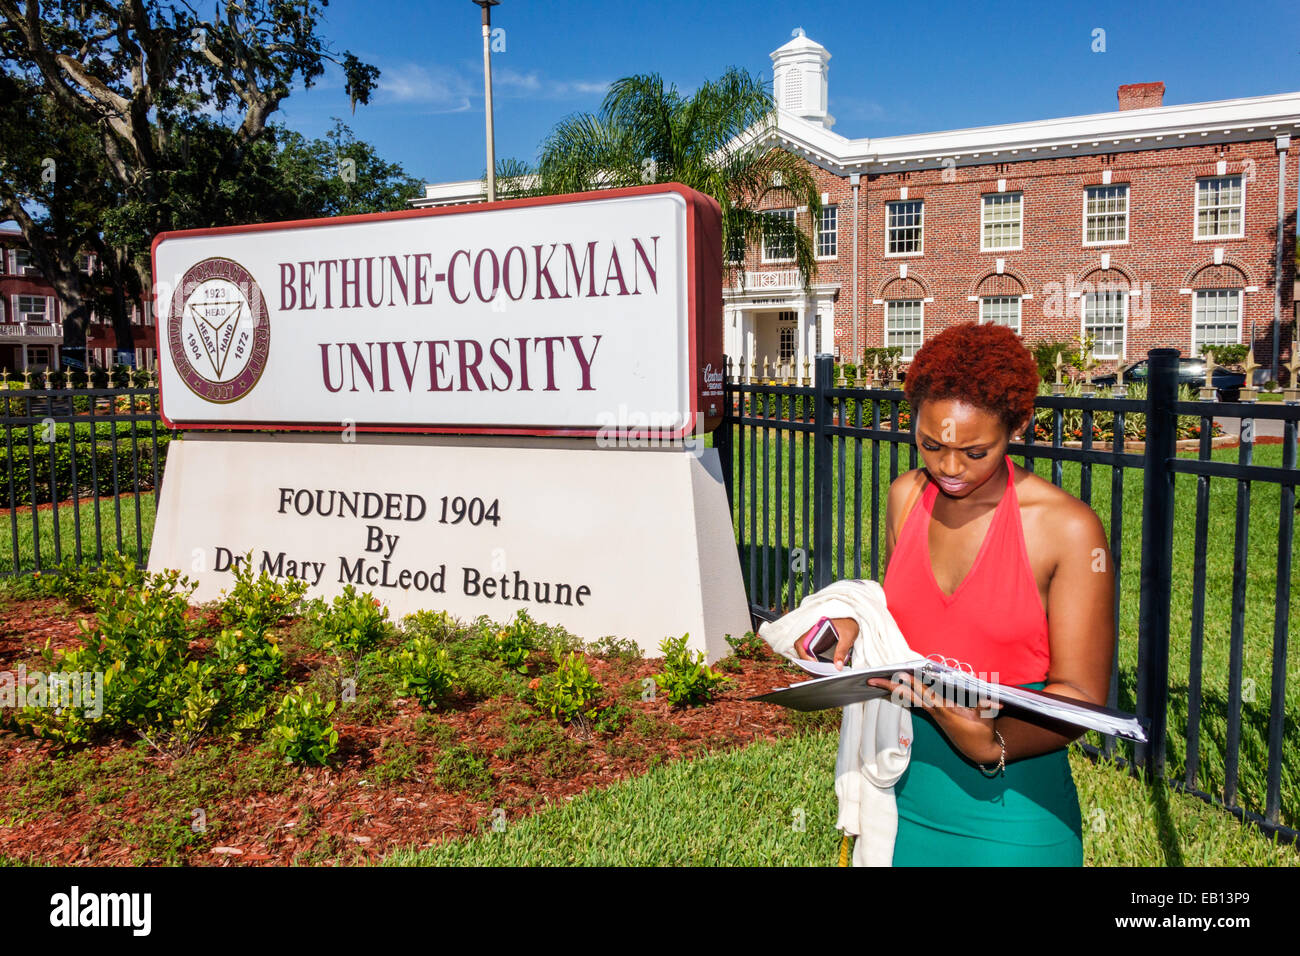 Daytona Beach Florida, Bethune-Cookman University, campus, negros africanos africanos minoría étnica, adultos mujeres mujeres mujer mujer mujer, adolescentes Foto de stock